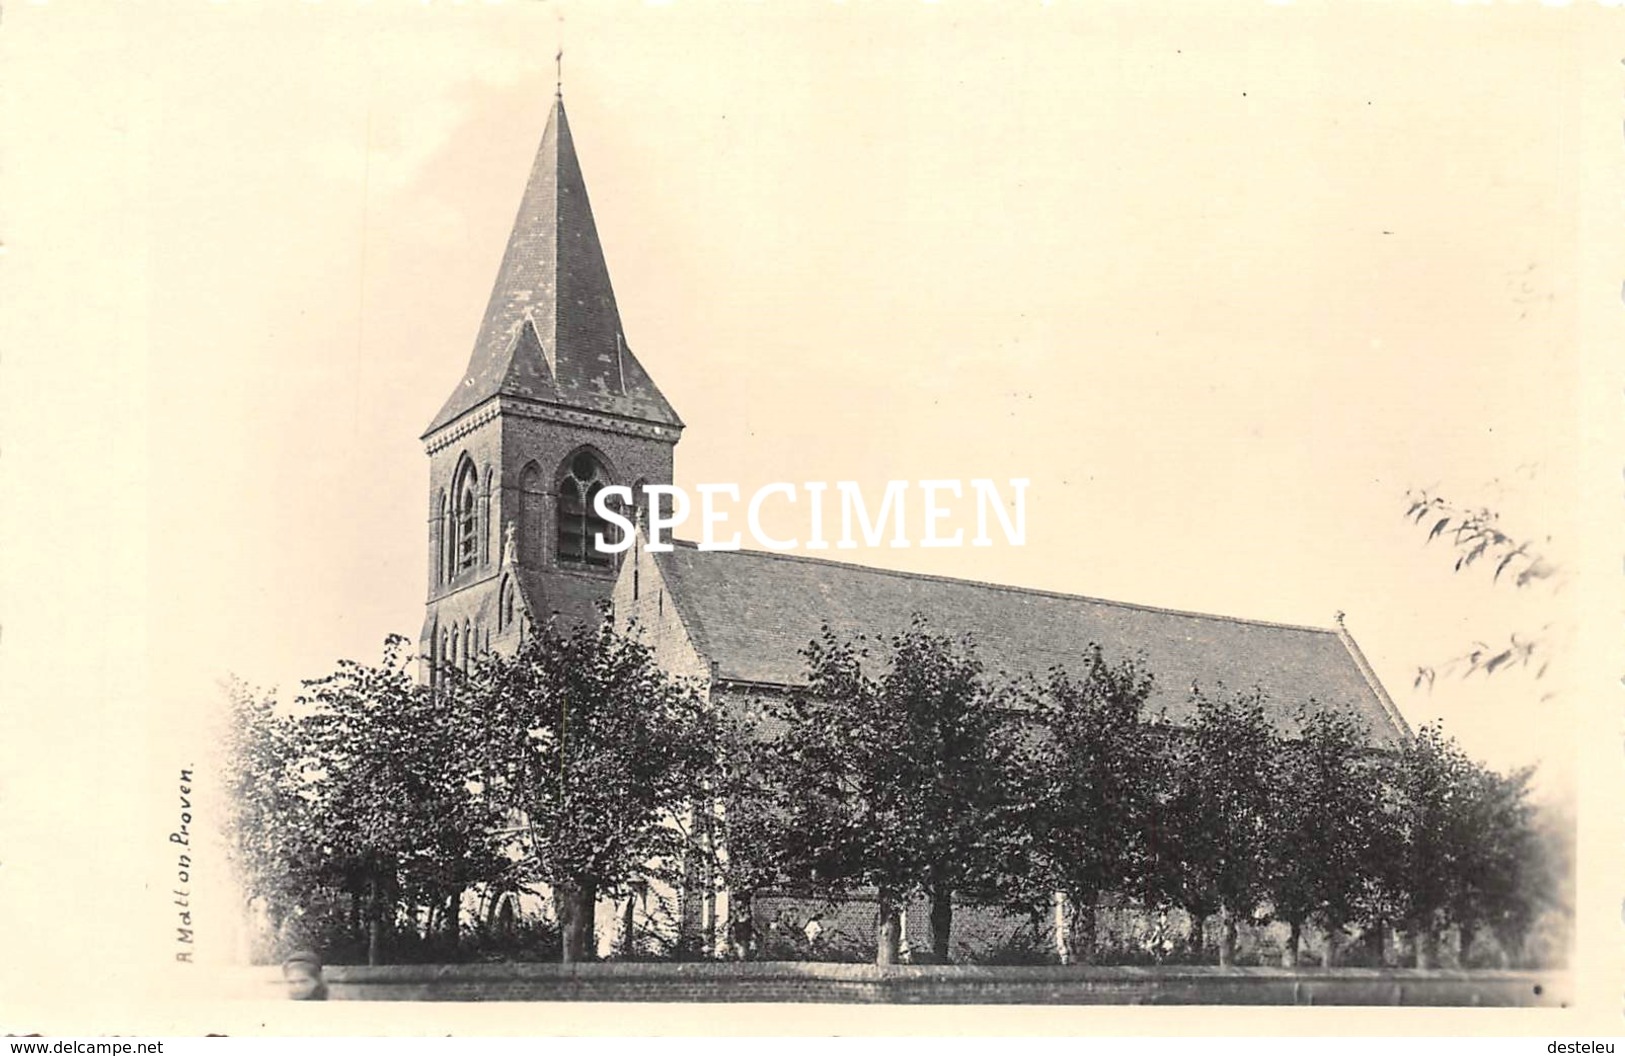 Fotokaart Kerk - Zerkegem - Jabbeke